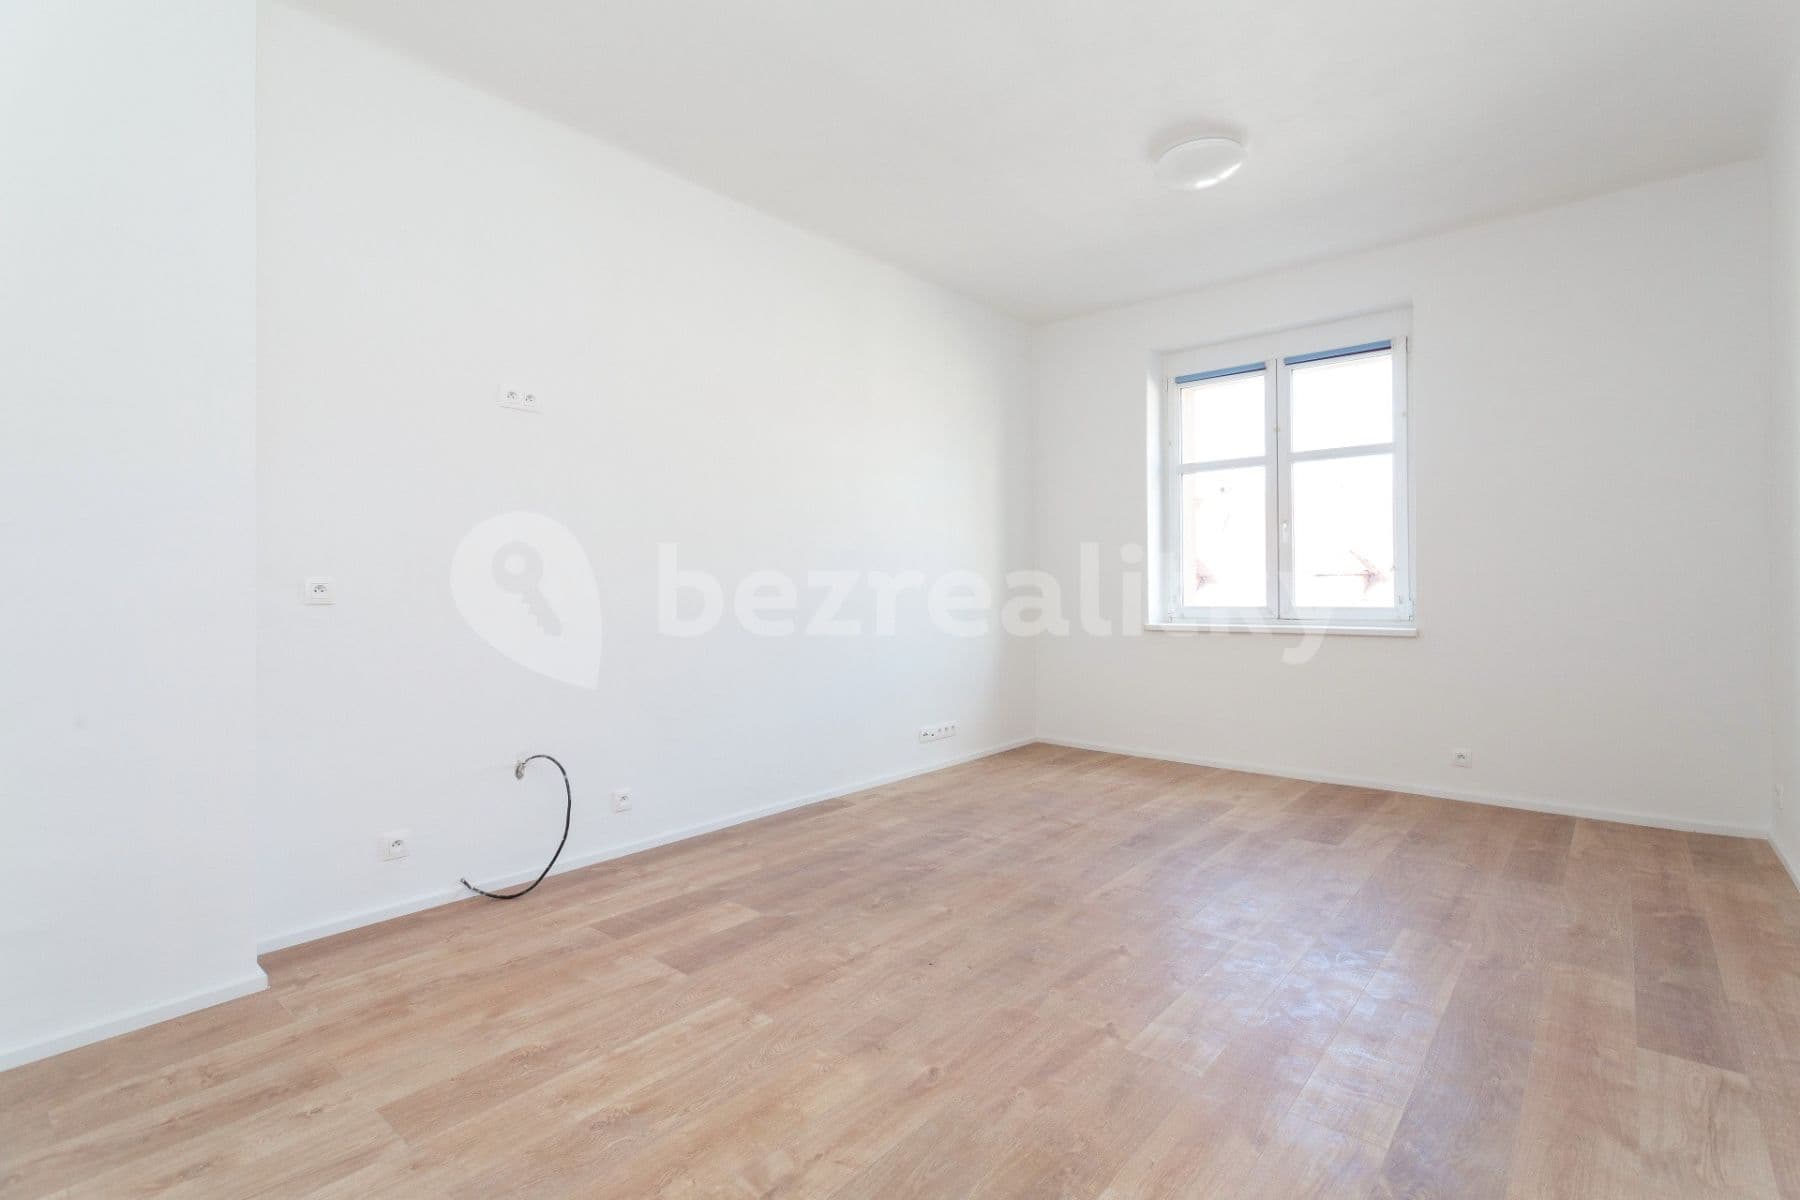 1 bedroom with open-plan kitchen flat for sale, 54 m², Černokostelecká, Prague, Prague